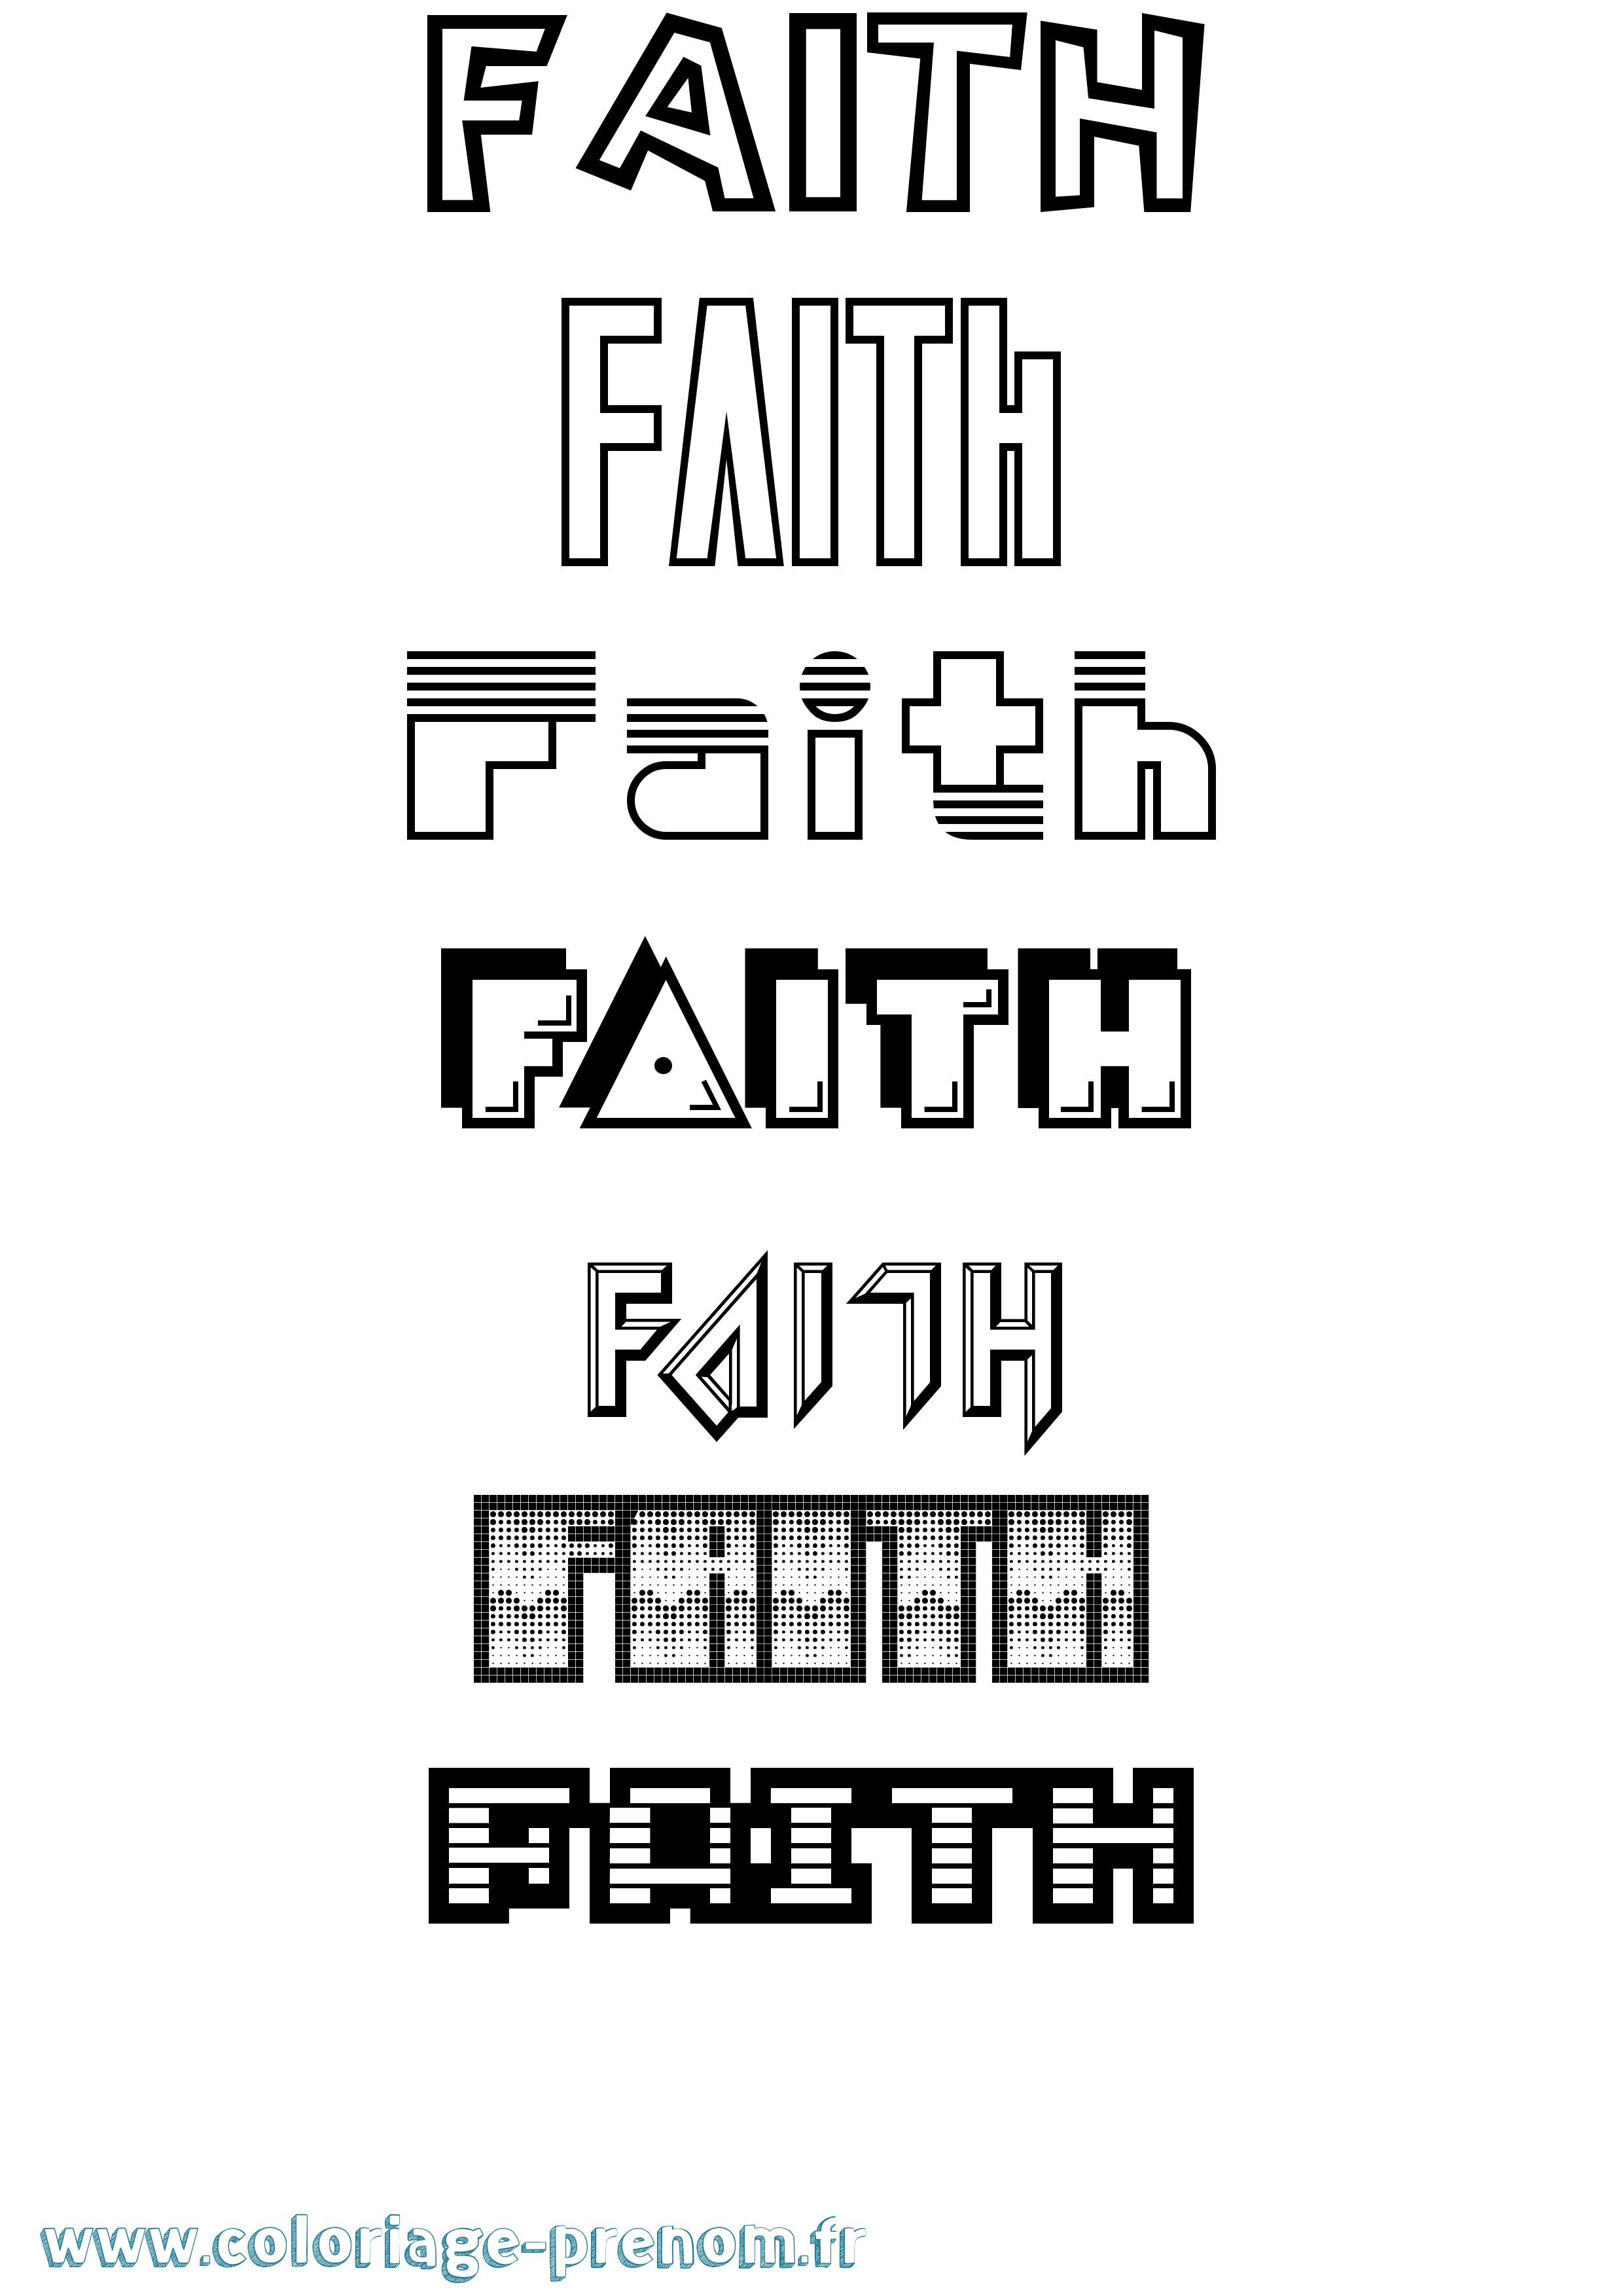 Coloriage prénom Faith